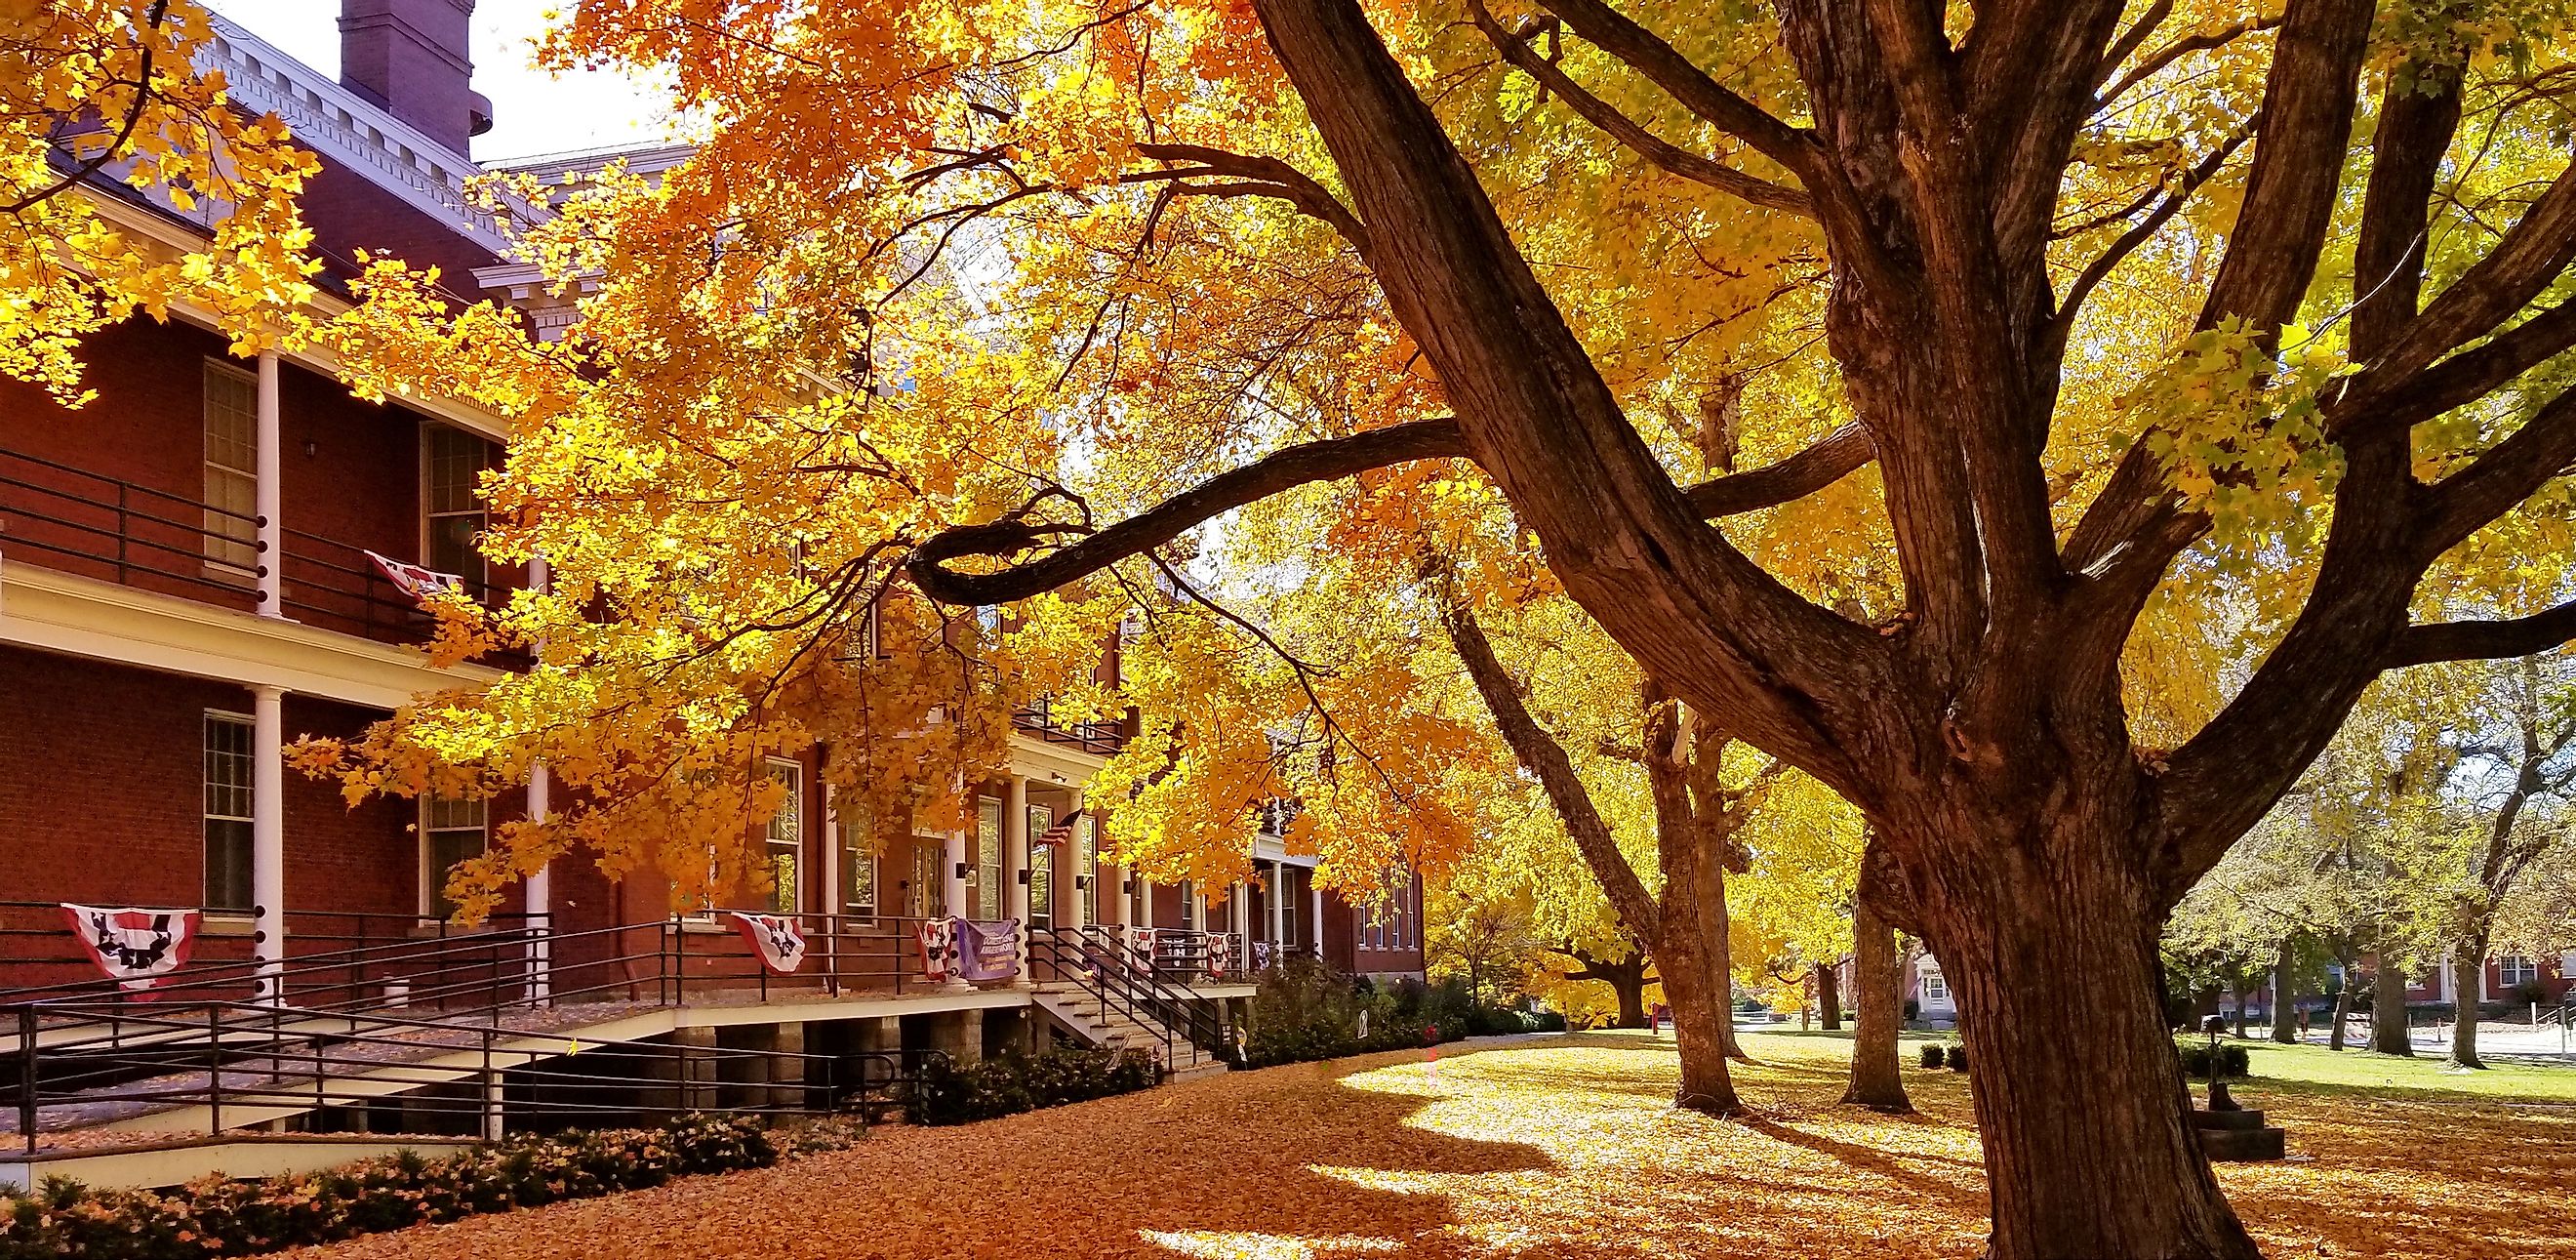 Colorful fall foliage at Fort Leavenworth, Kansas, USA.